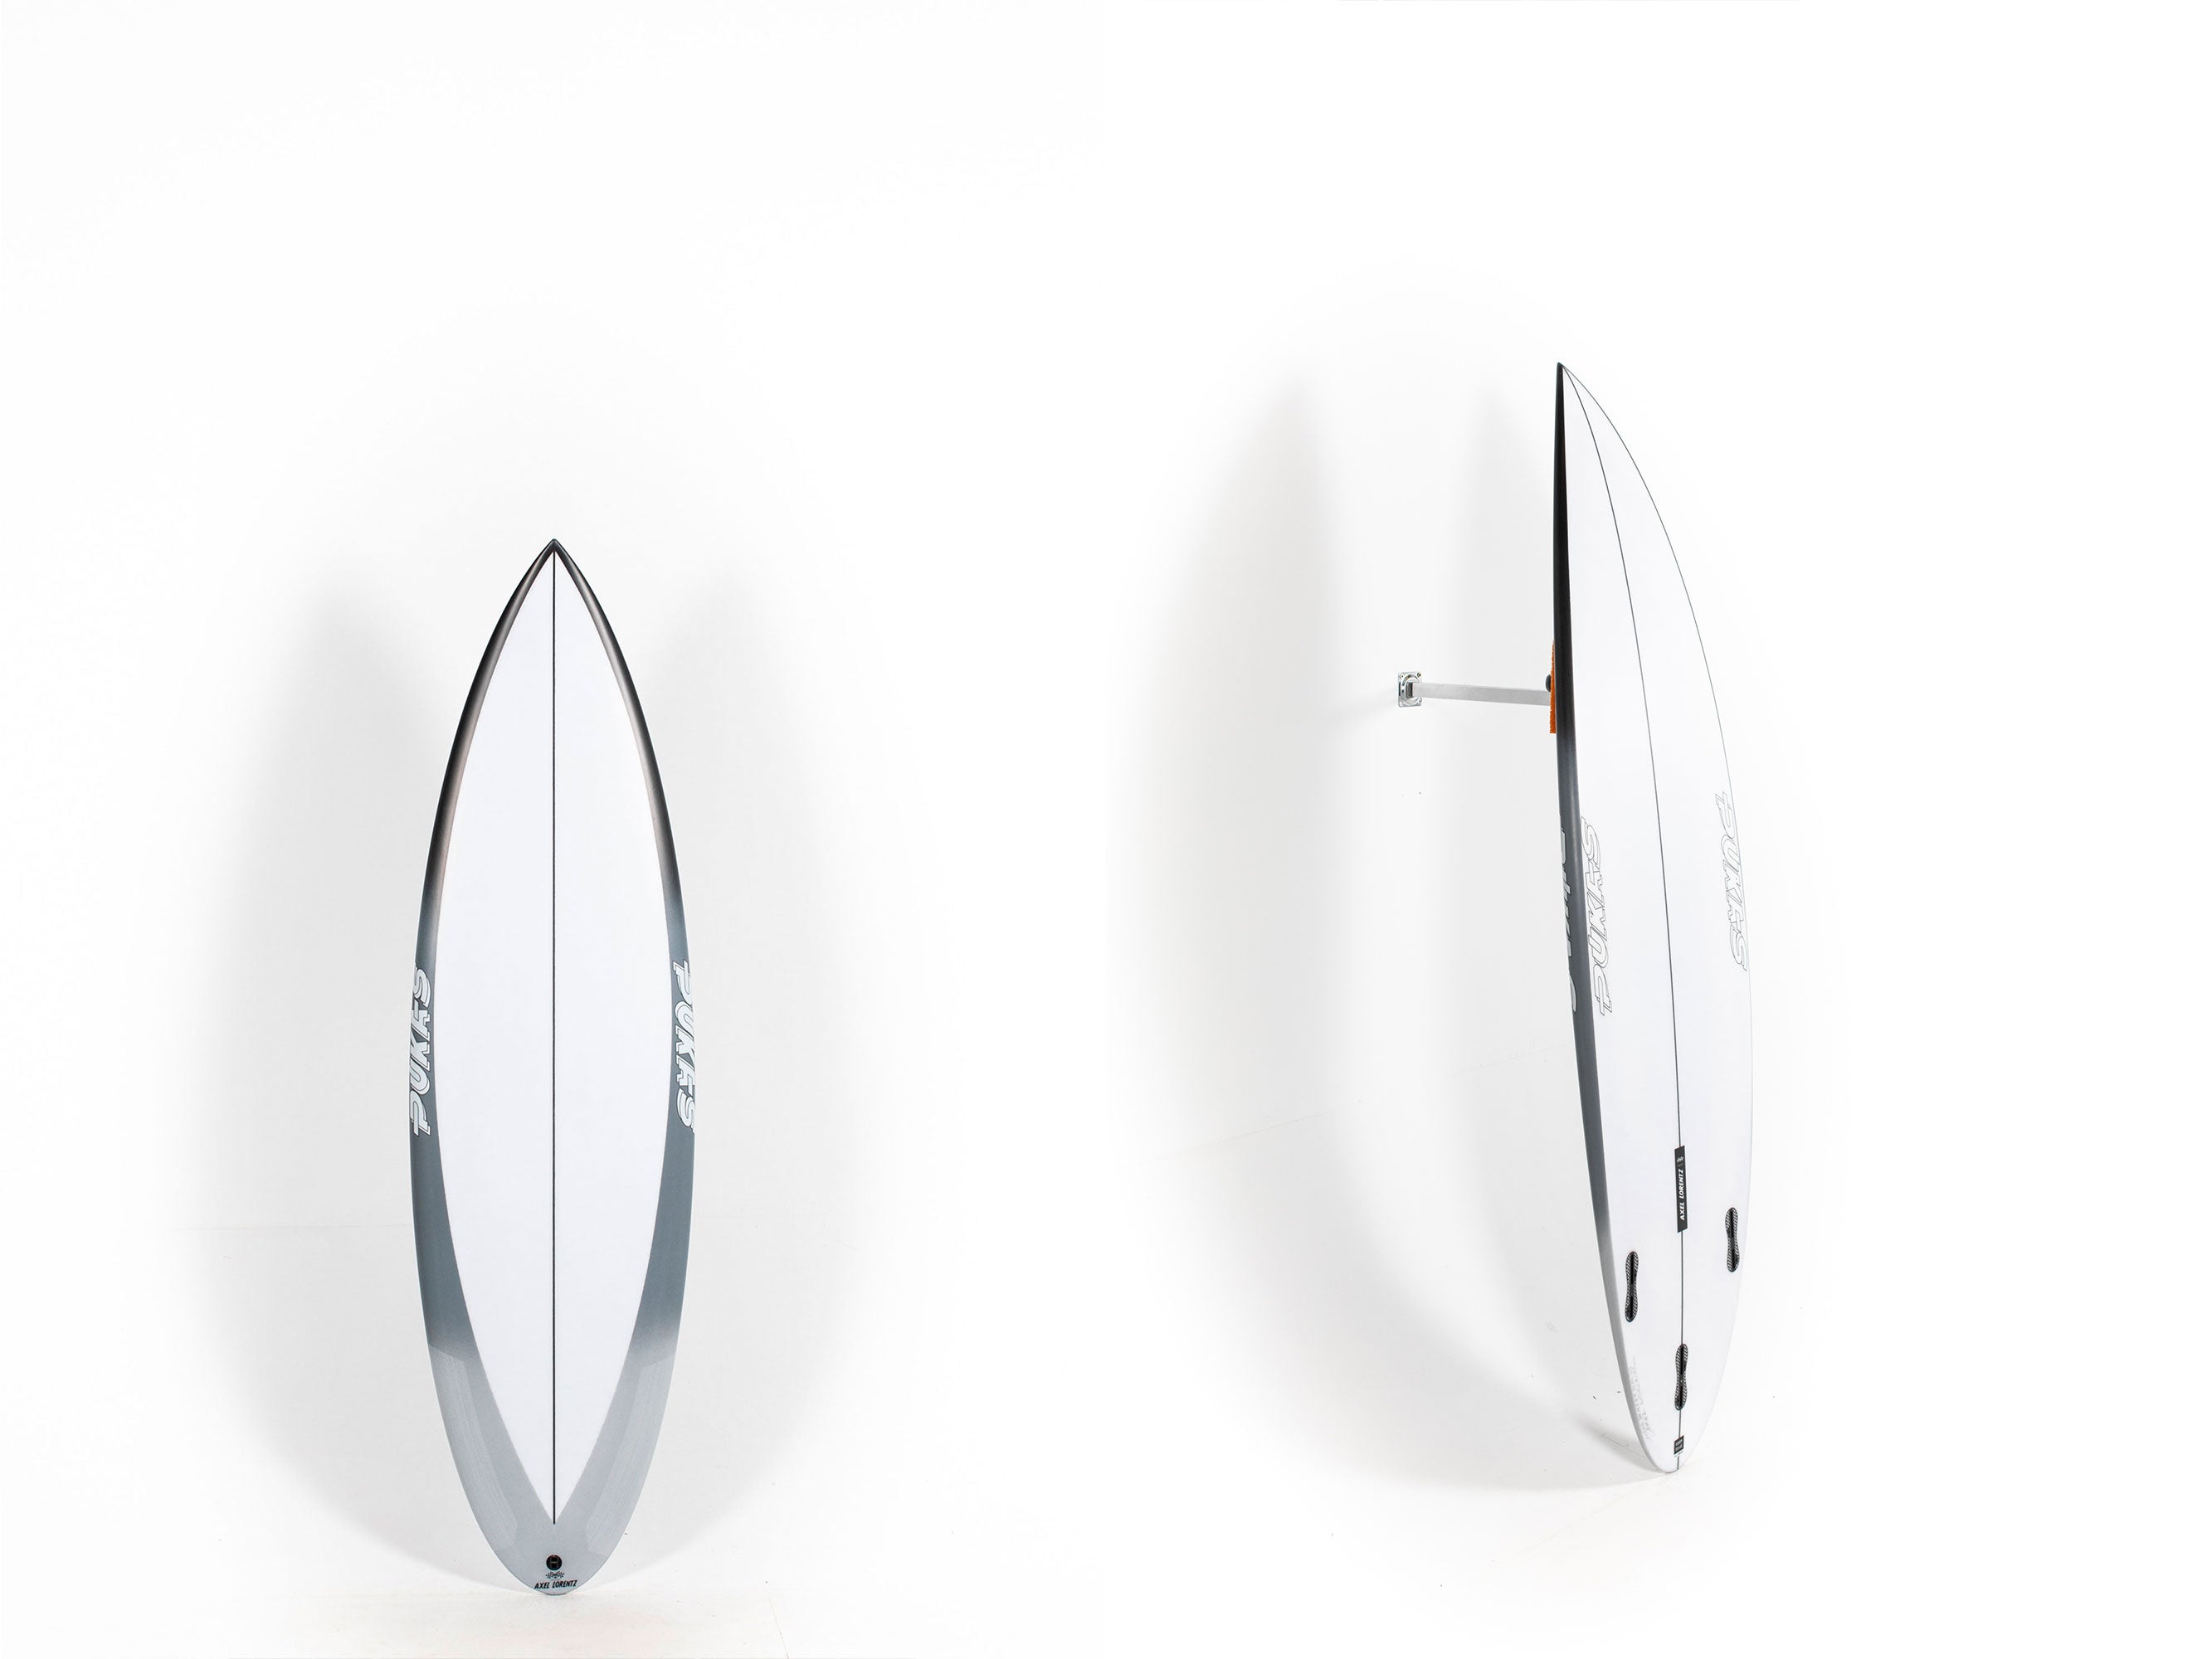 Pukas Surfboard - TASTY TREAT ALL ROUND HP by Axel Lorentz - 5'11" x 19.5 x 2.5 x 30,5L - AX08750